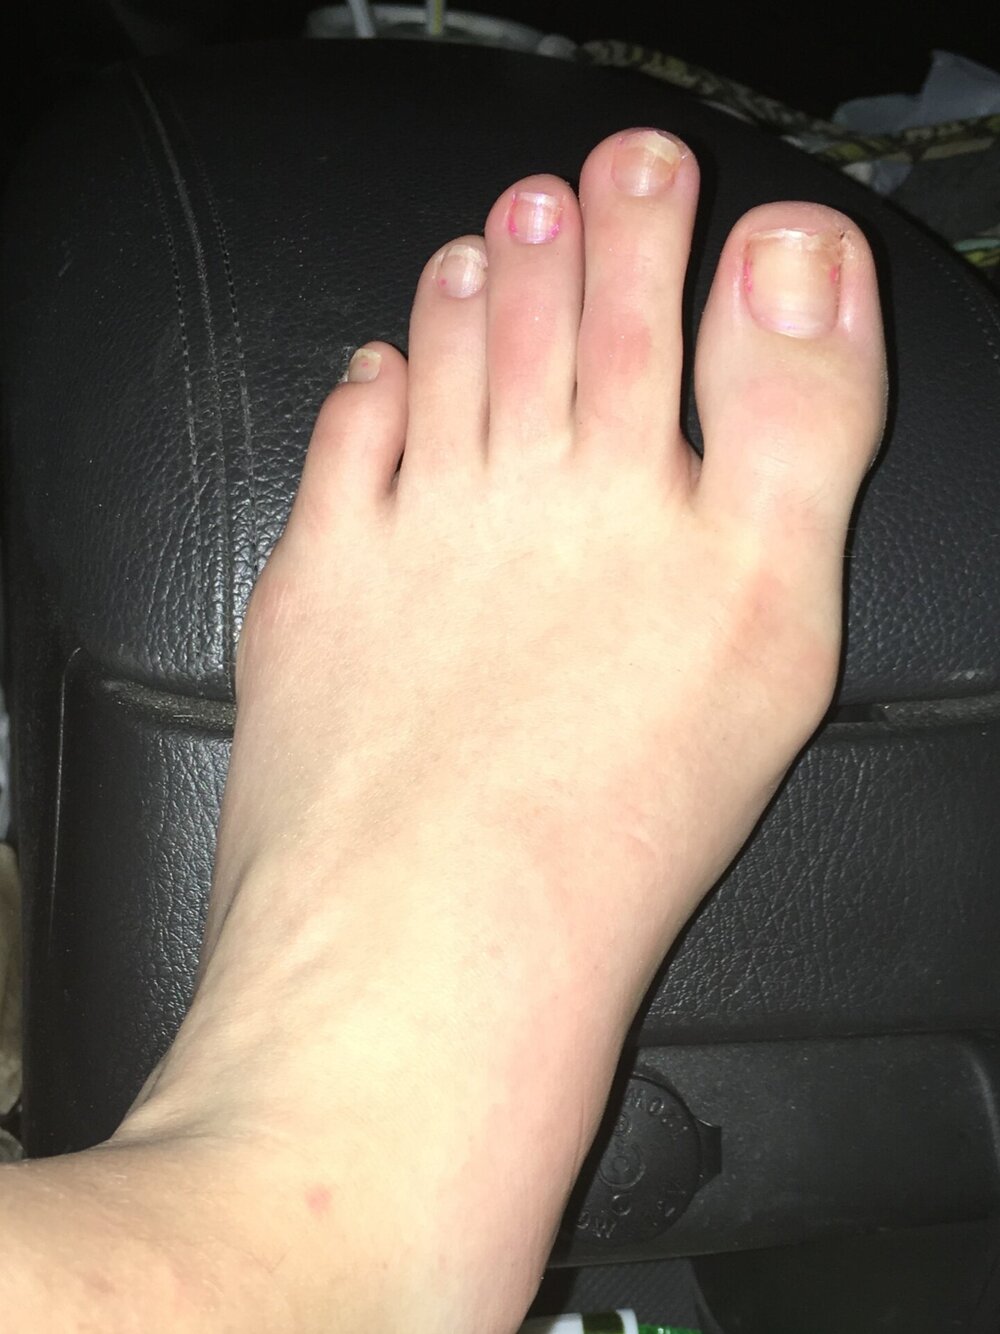 Left Foot Pre-Surgery